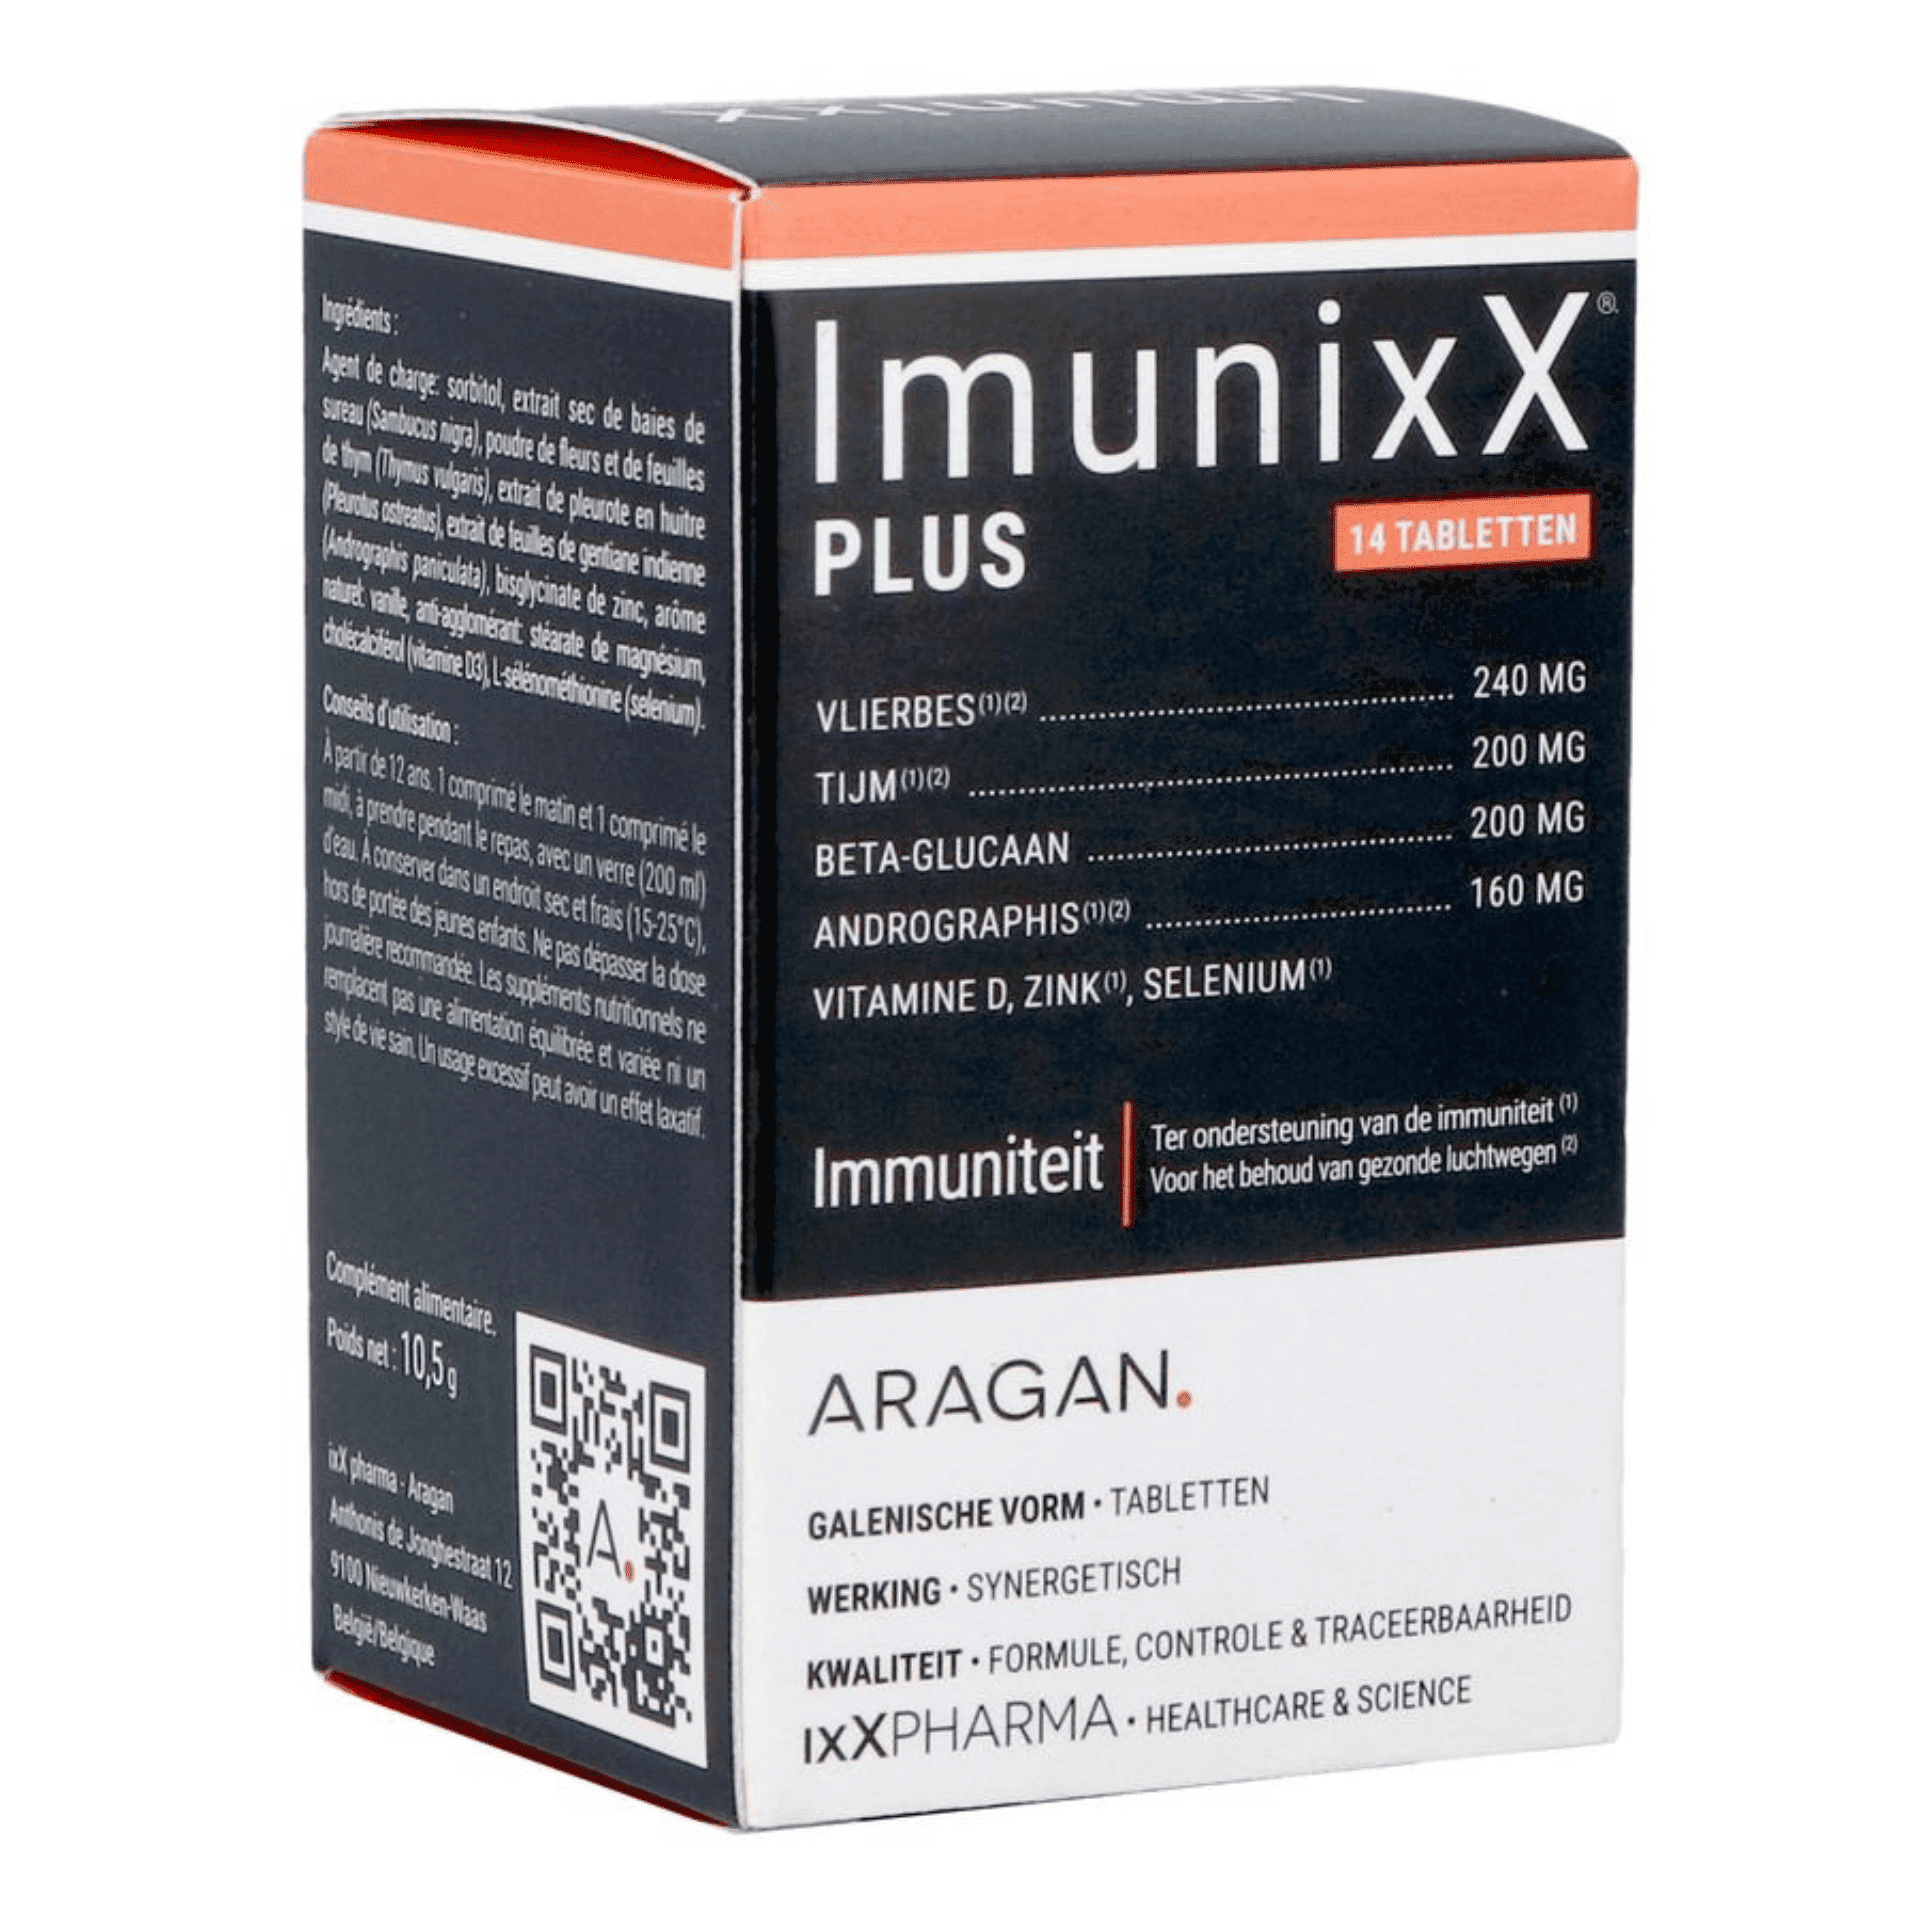 Imunixx Plus Comp 14 Nf